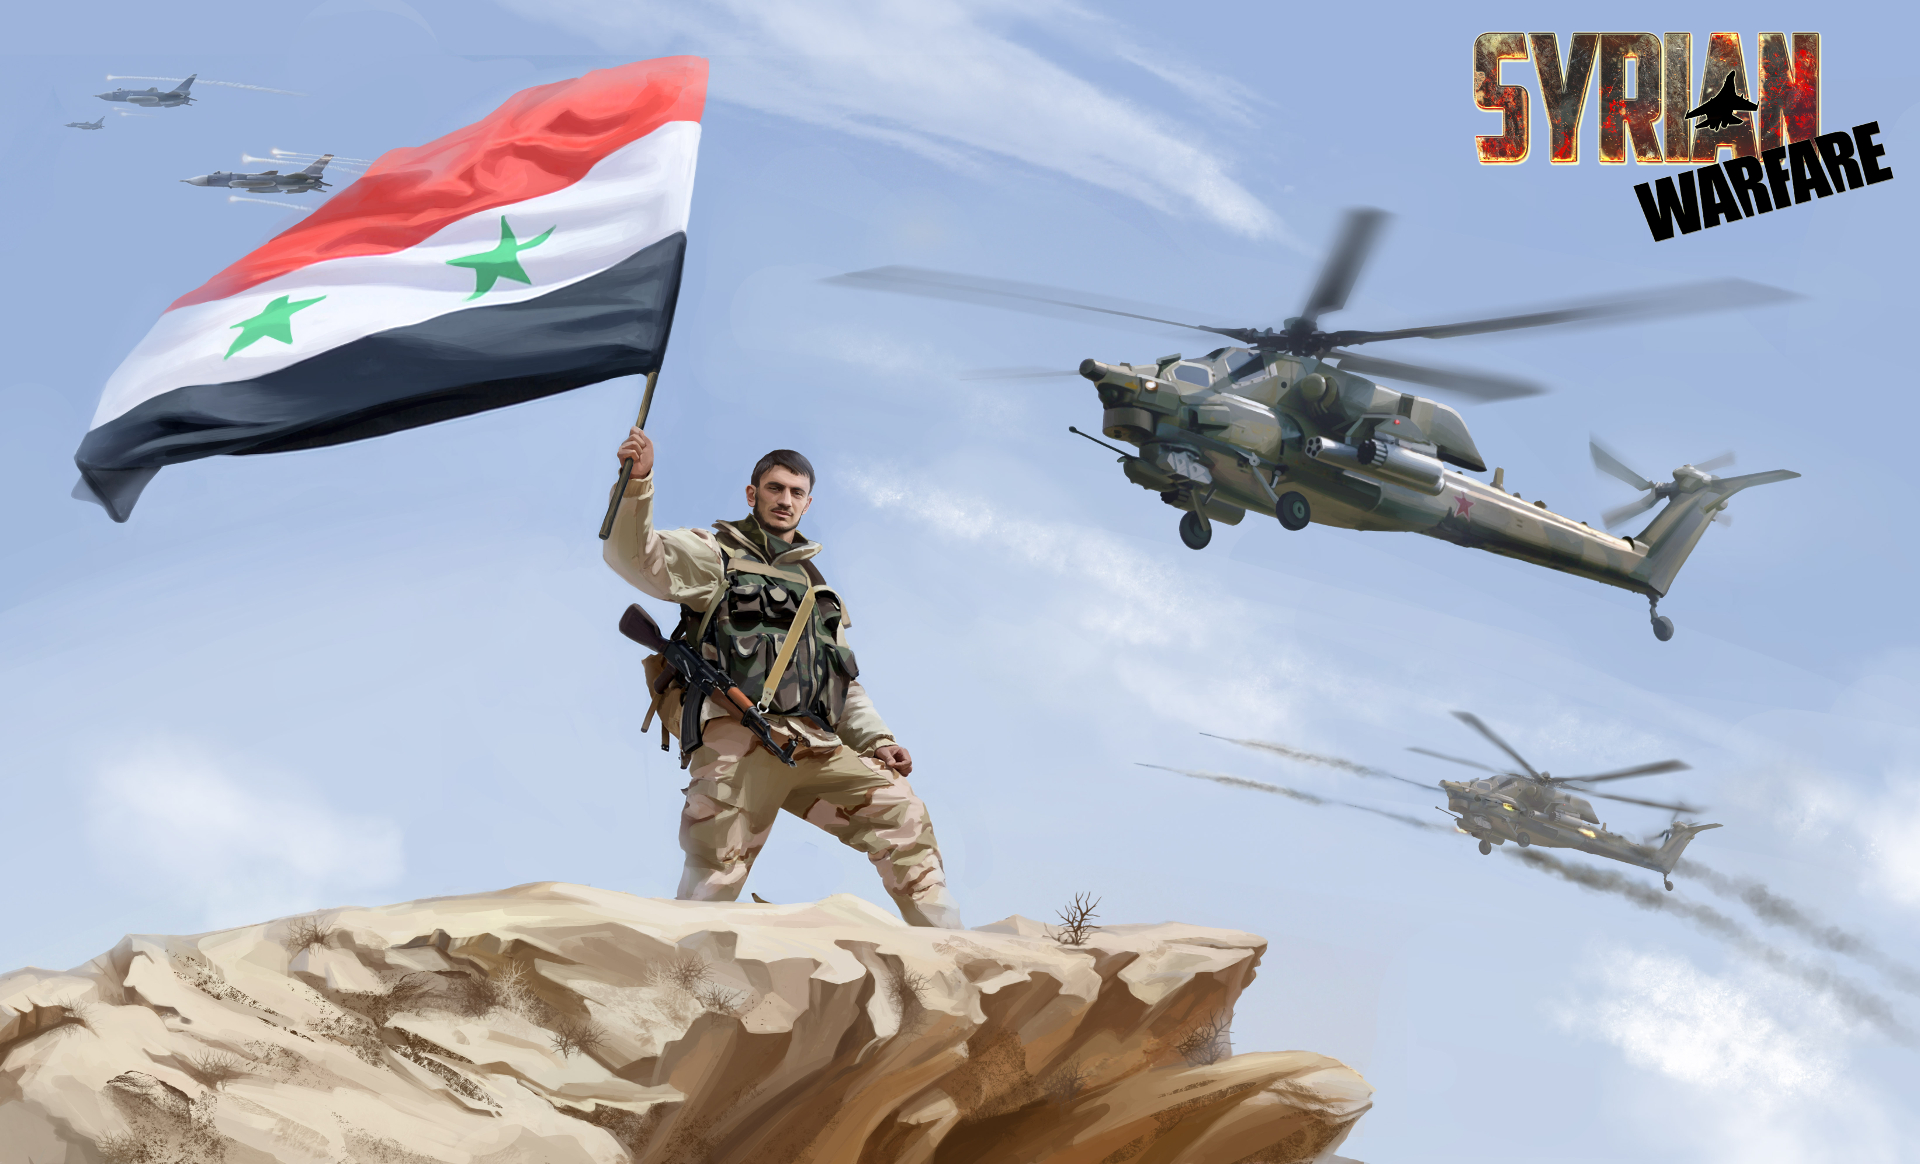 syrian_warfare_wallpaper1.jpg